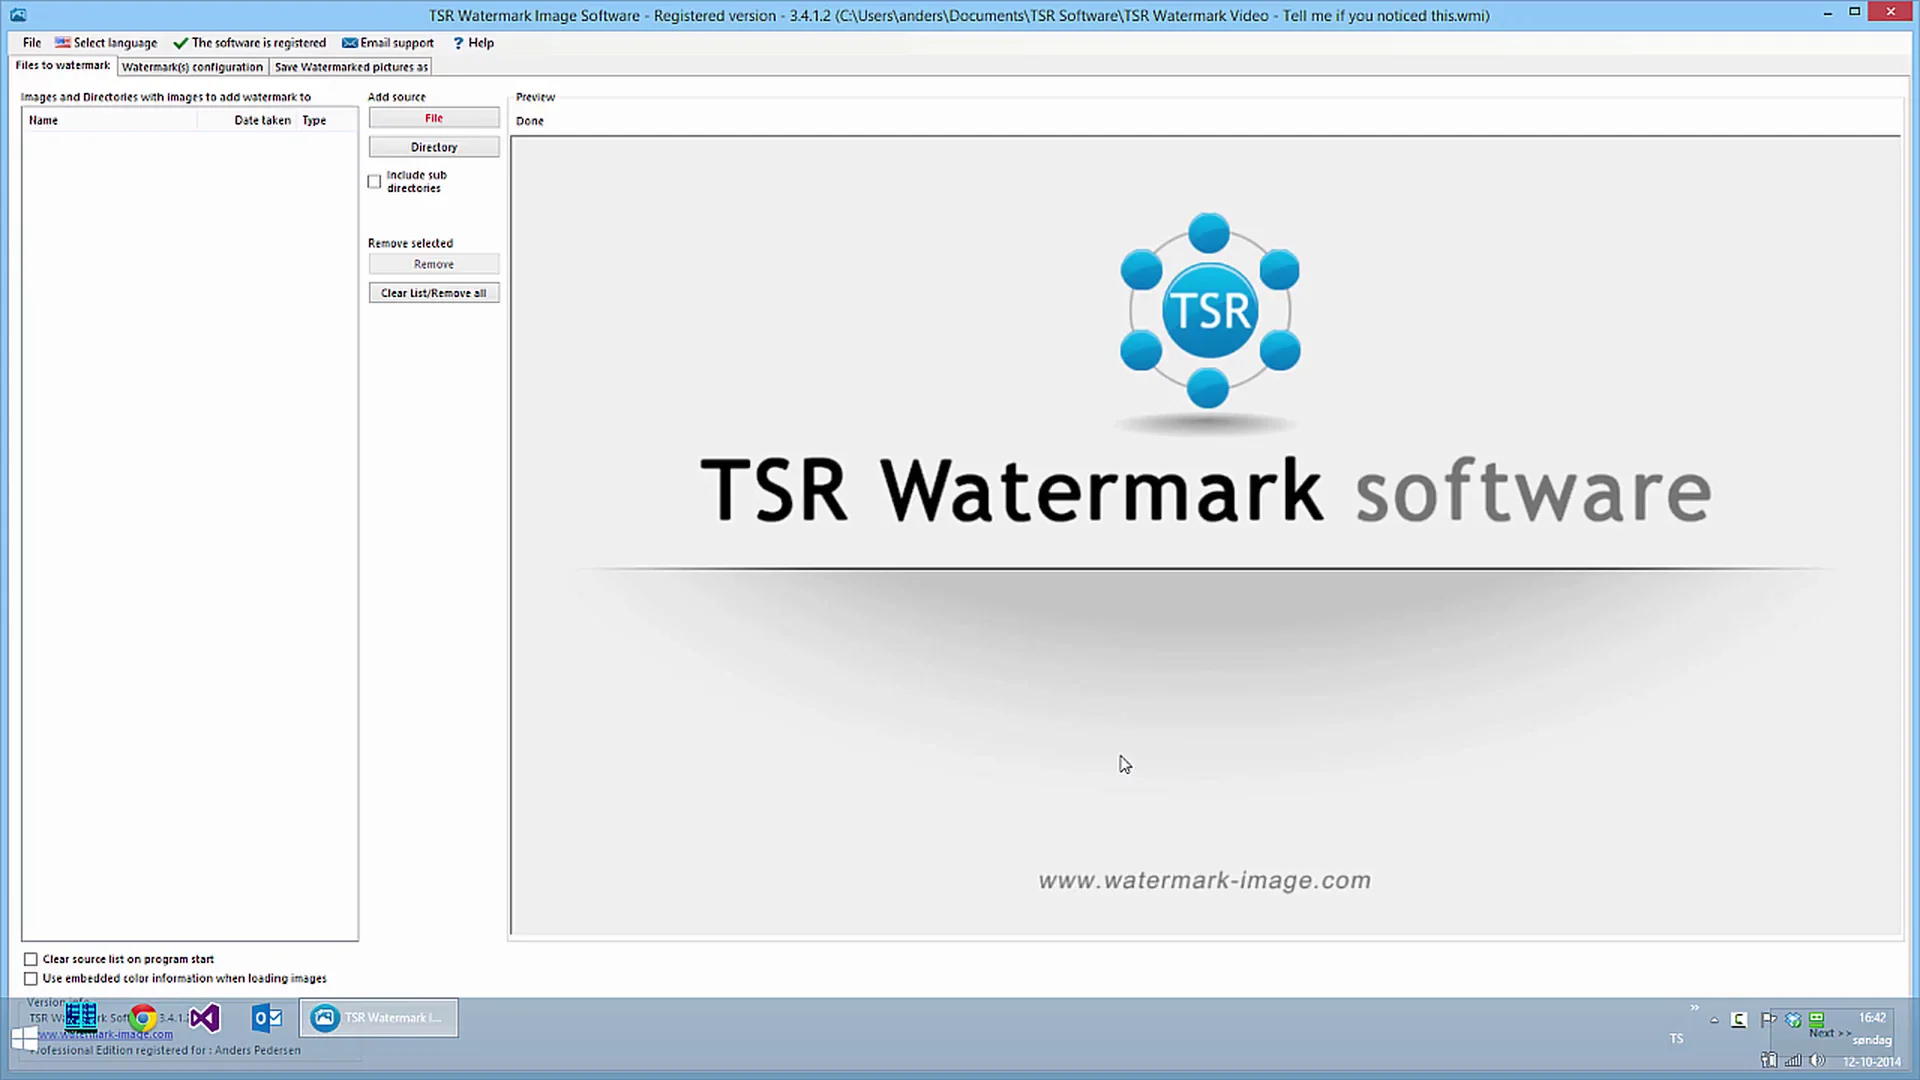 Watermarked Image Moderated - Platform Usage Support - Developer Forum